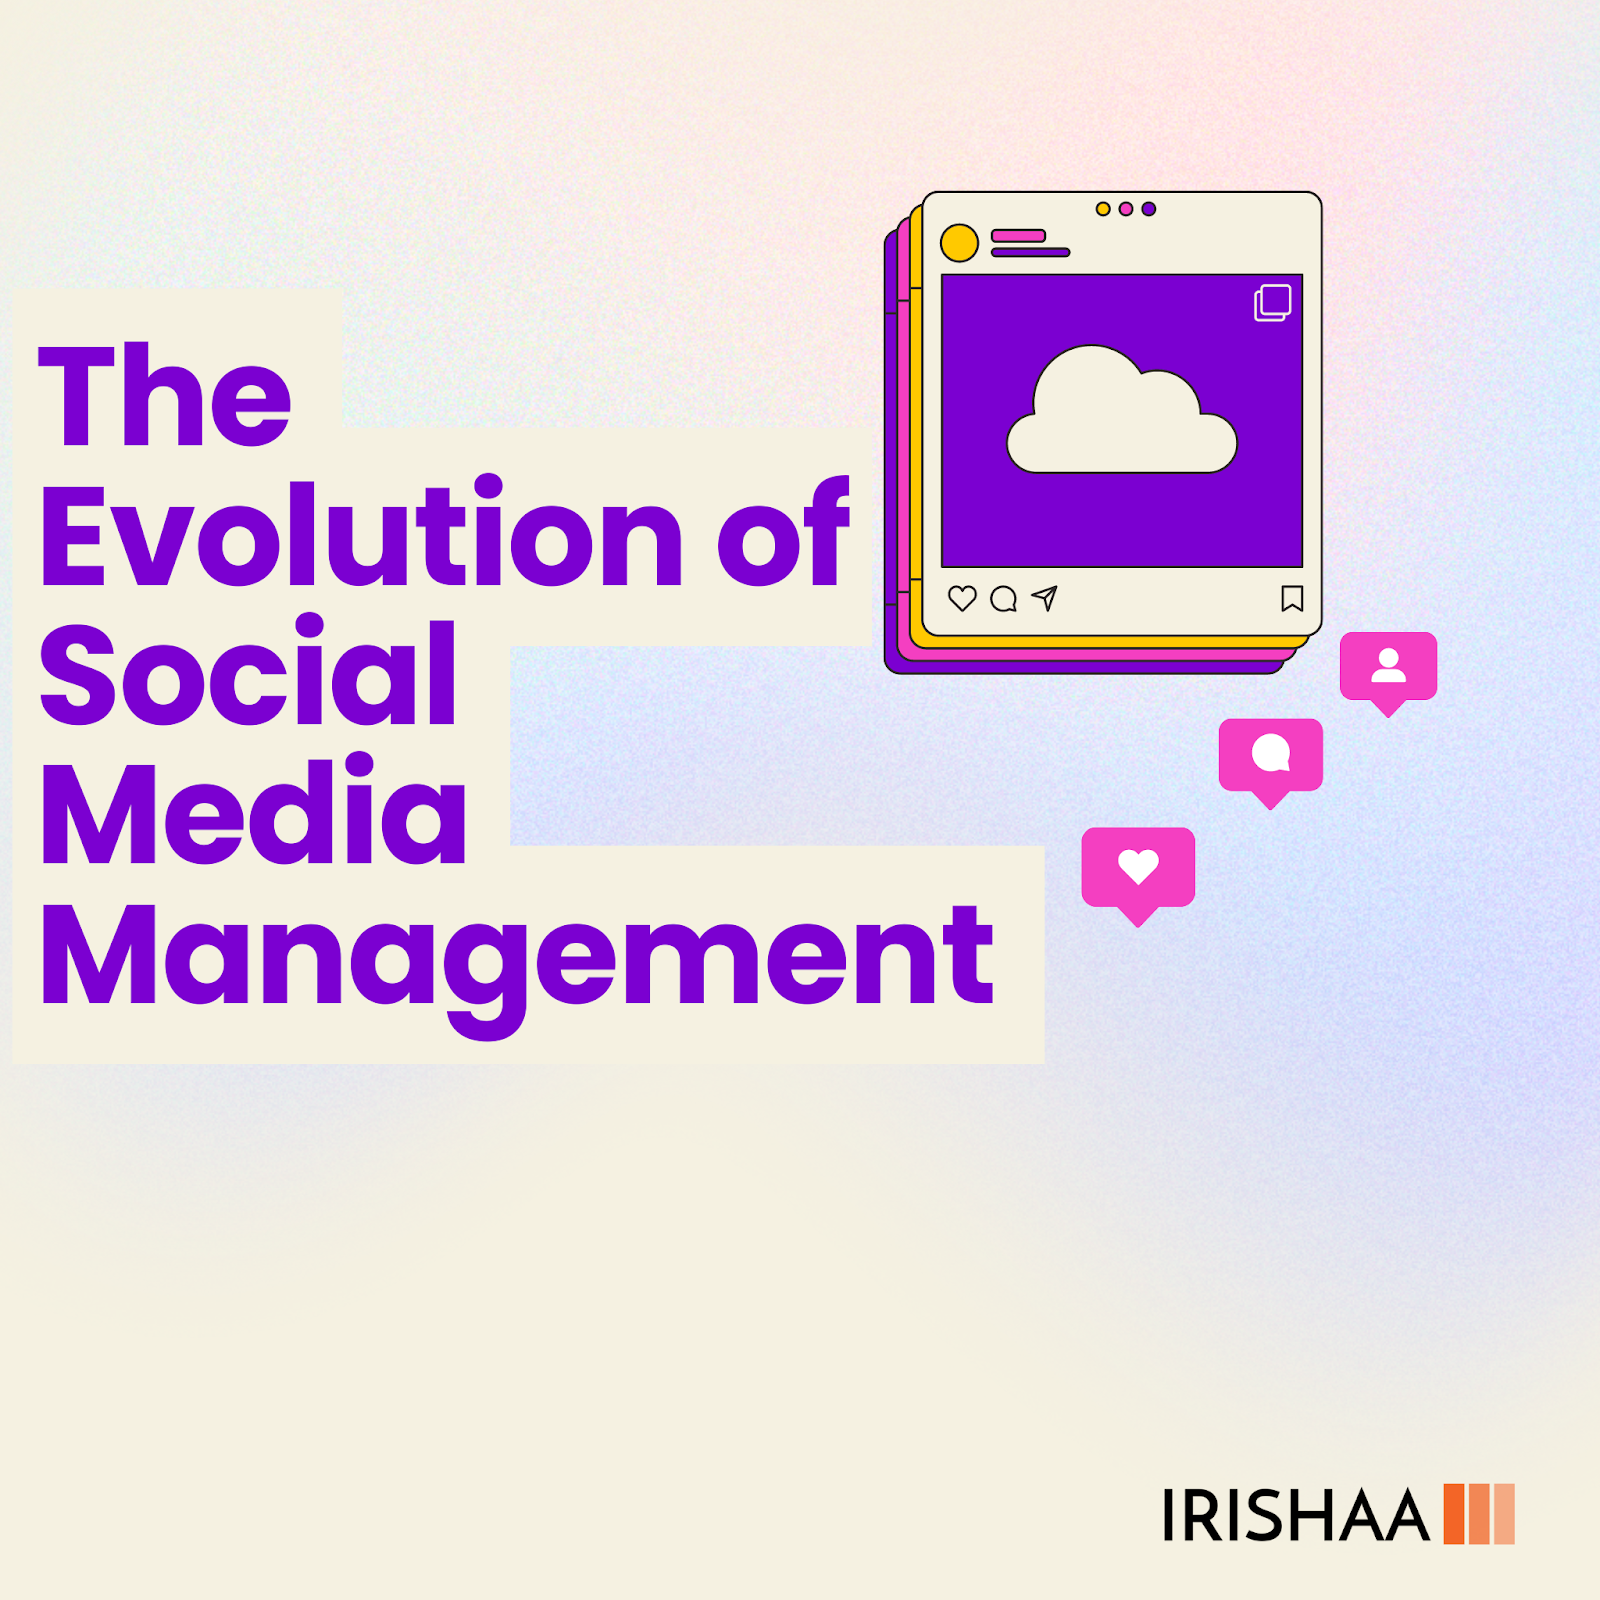 The Evolution of Social Media Management 
